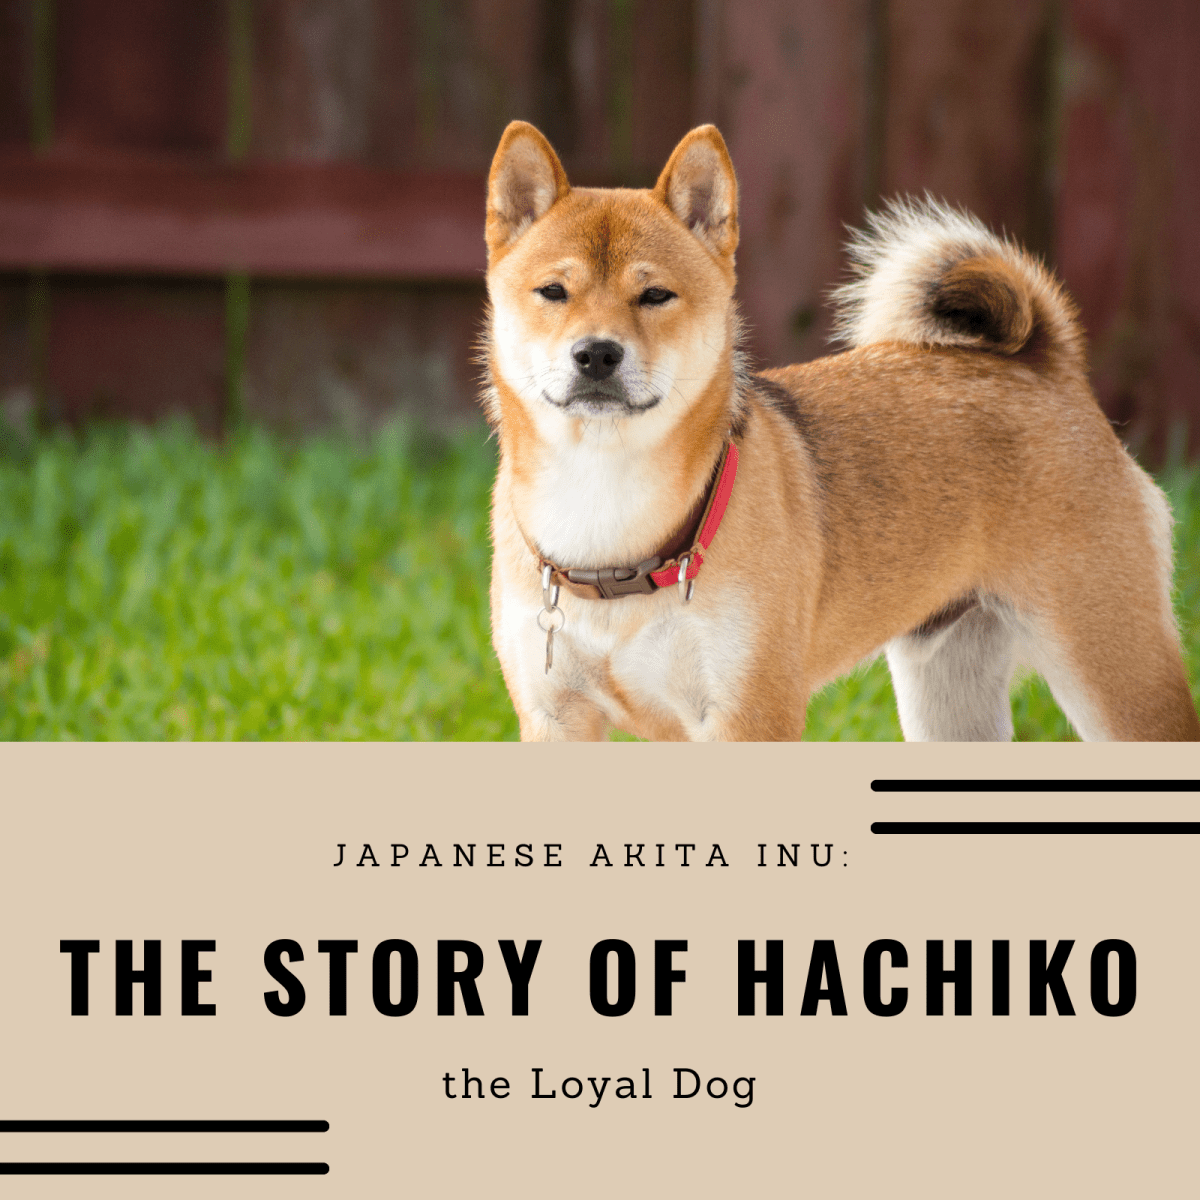 Japanese Akita Inu: The Story of Hachiko, the Loyal Dog - PetHelpful